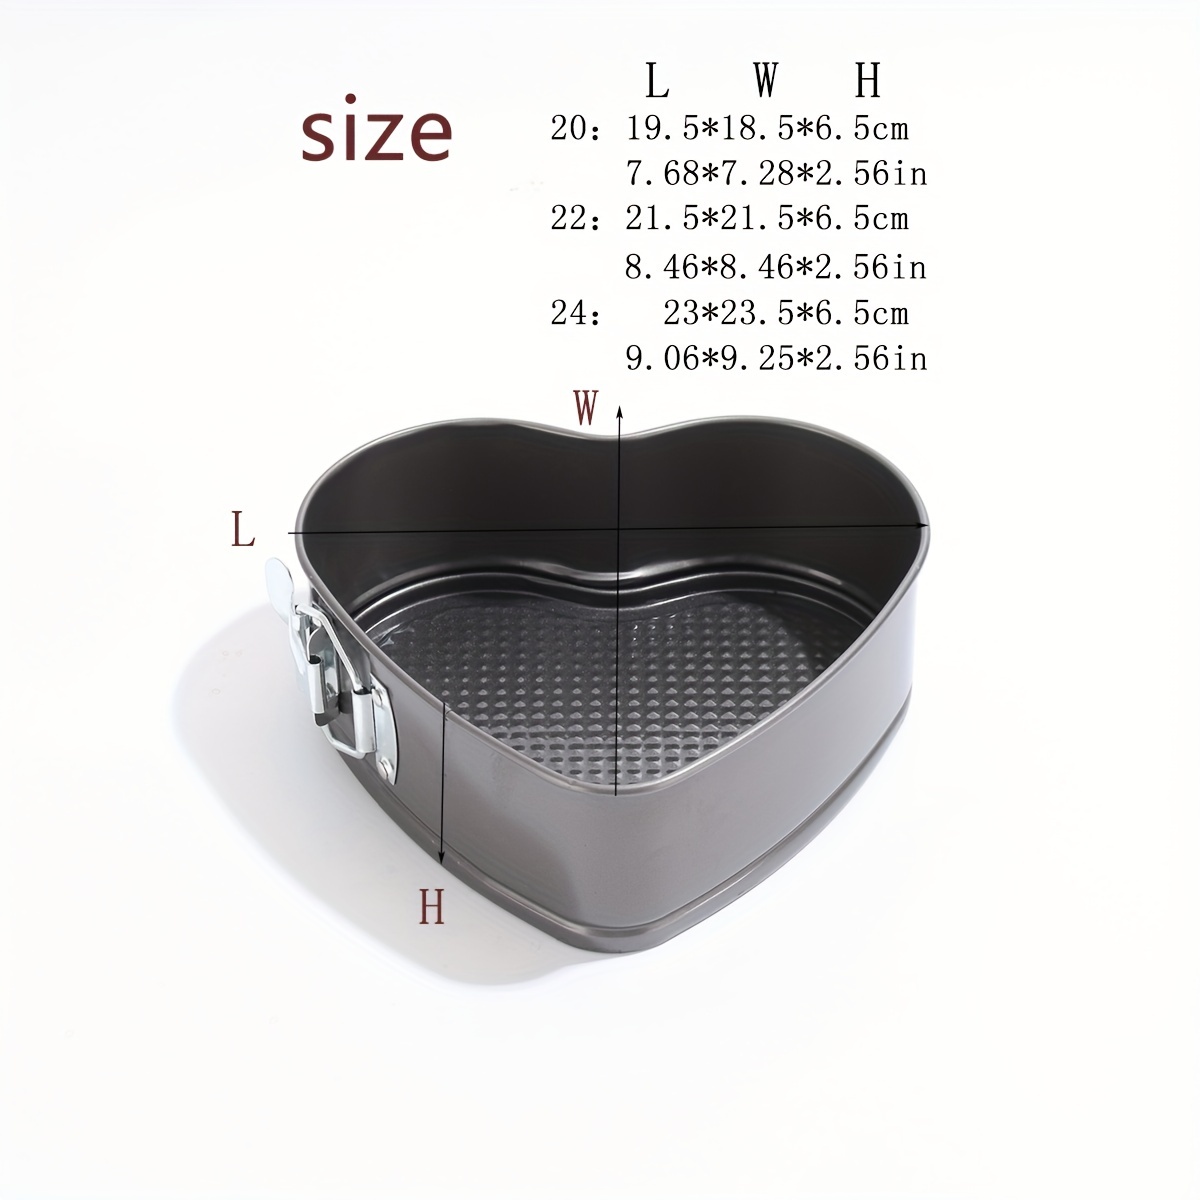 20,22,24 cm square springform cake pans